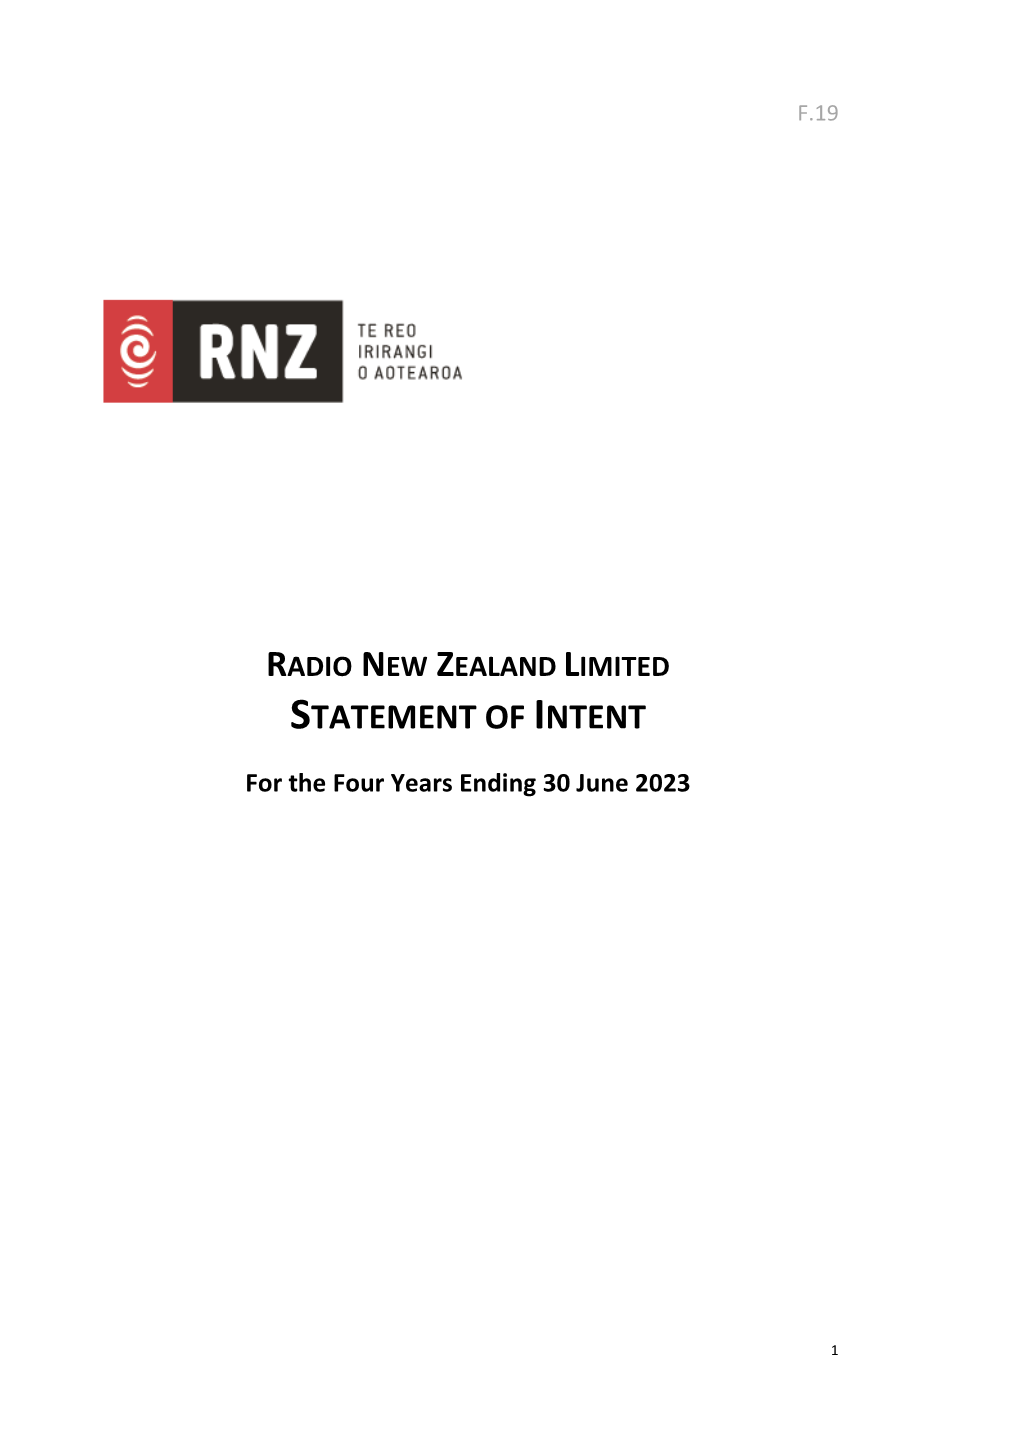 Radio New Zealand Limited Statement of Intent